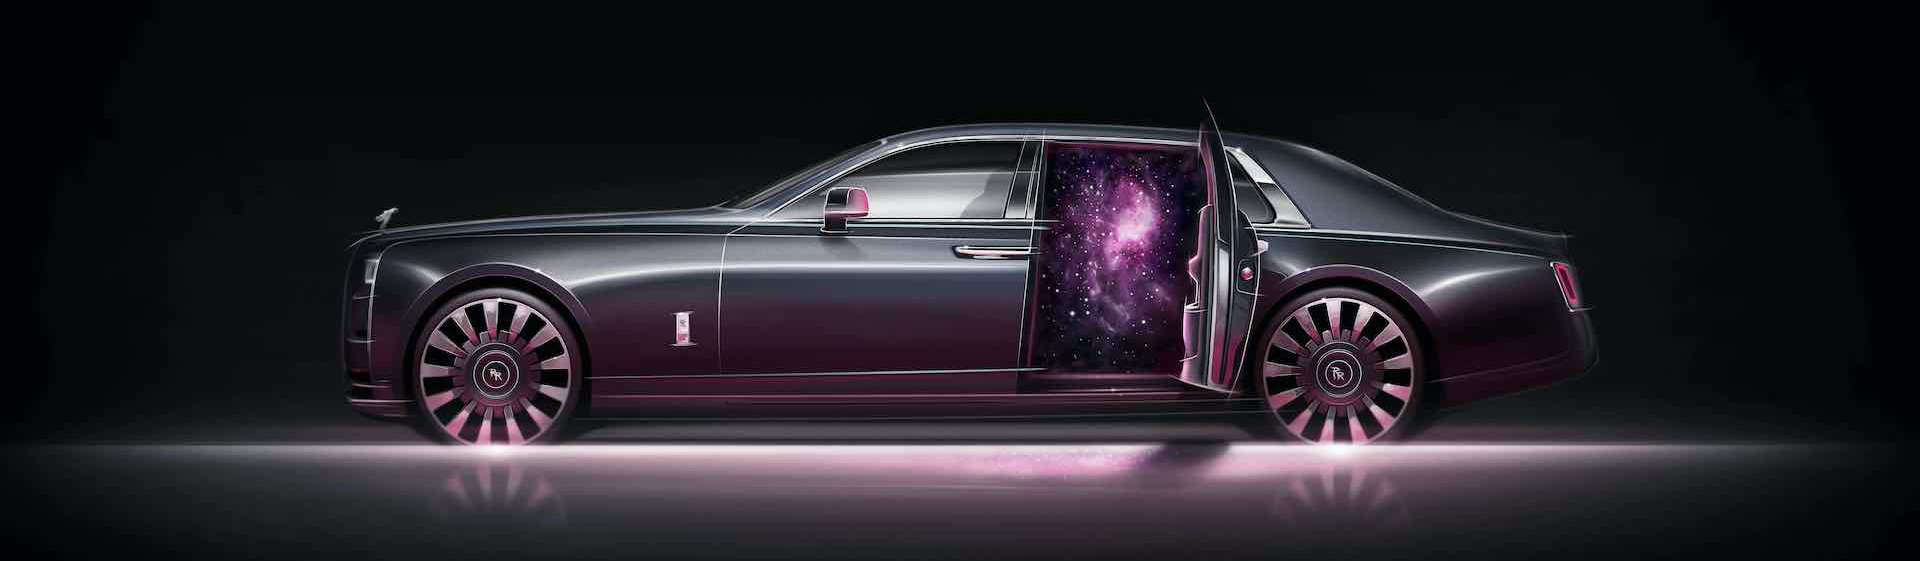 Rolls Royce Phantom Tempus Luxury Dealership Perfect Auto Collection